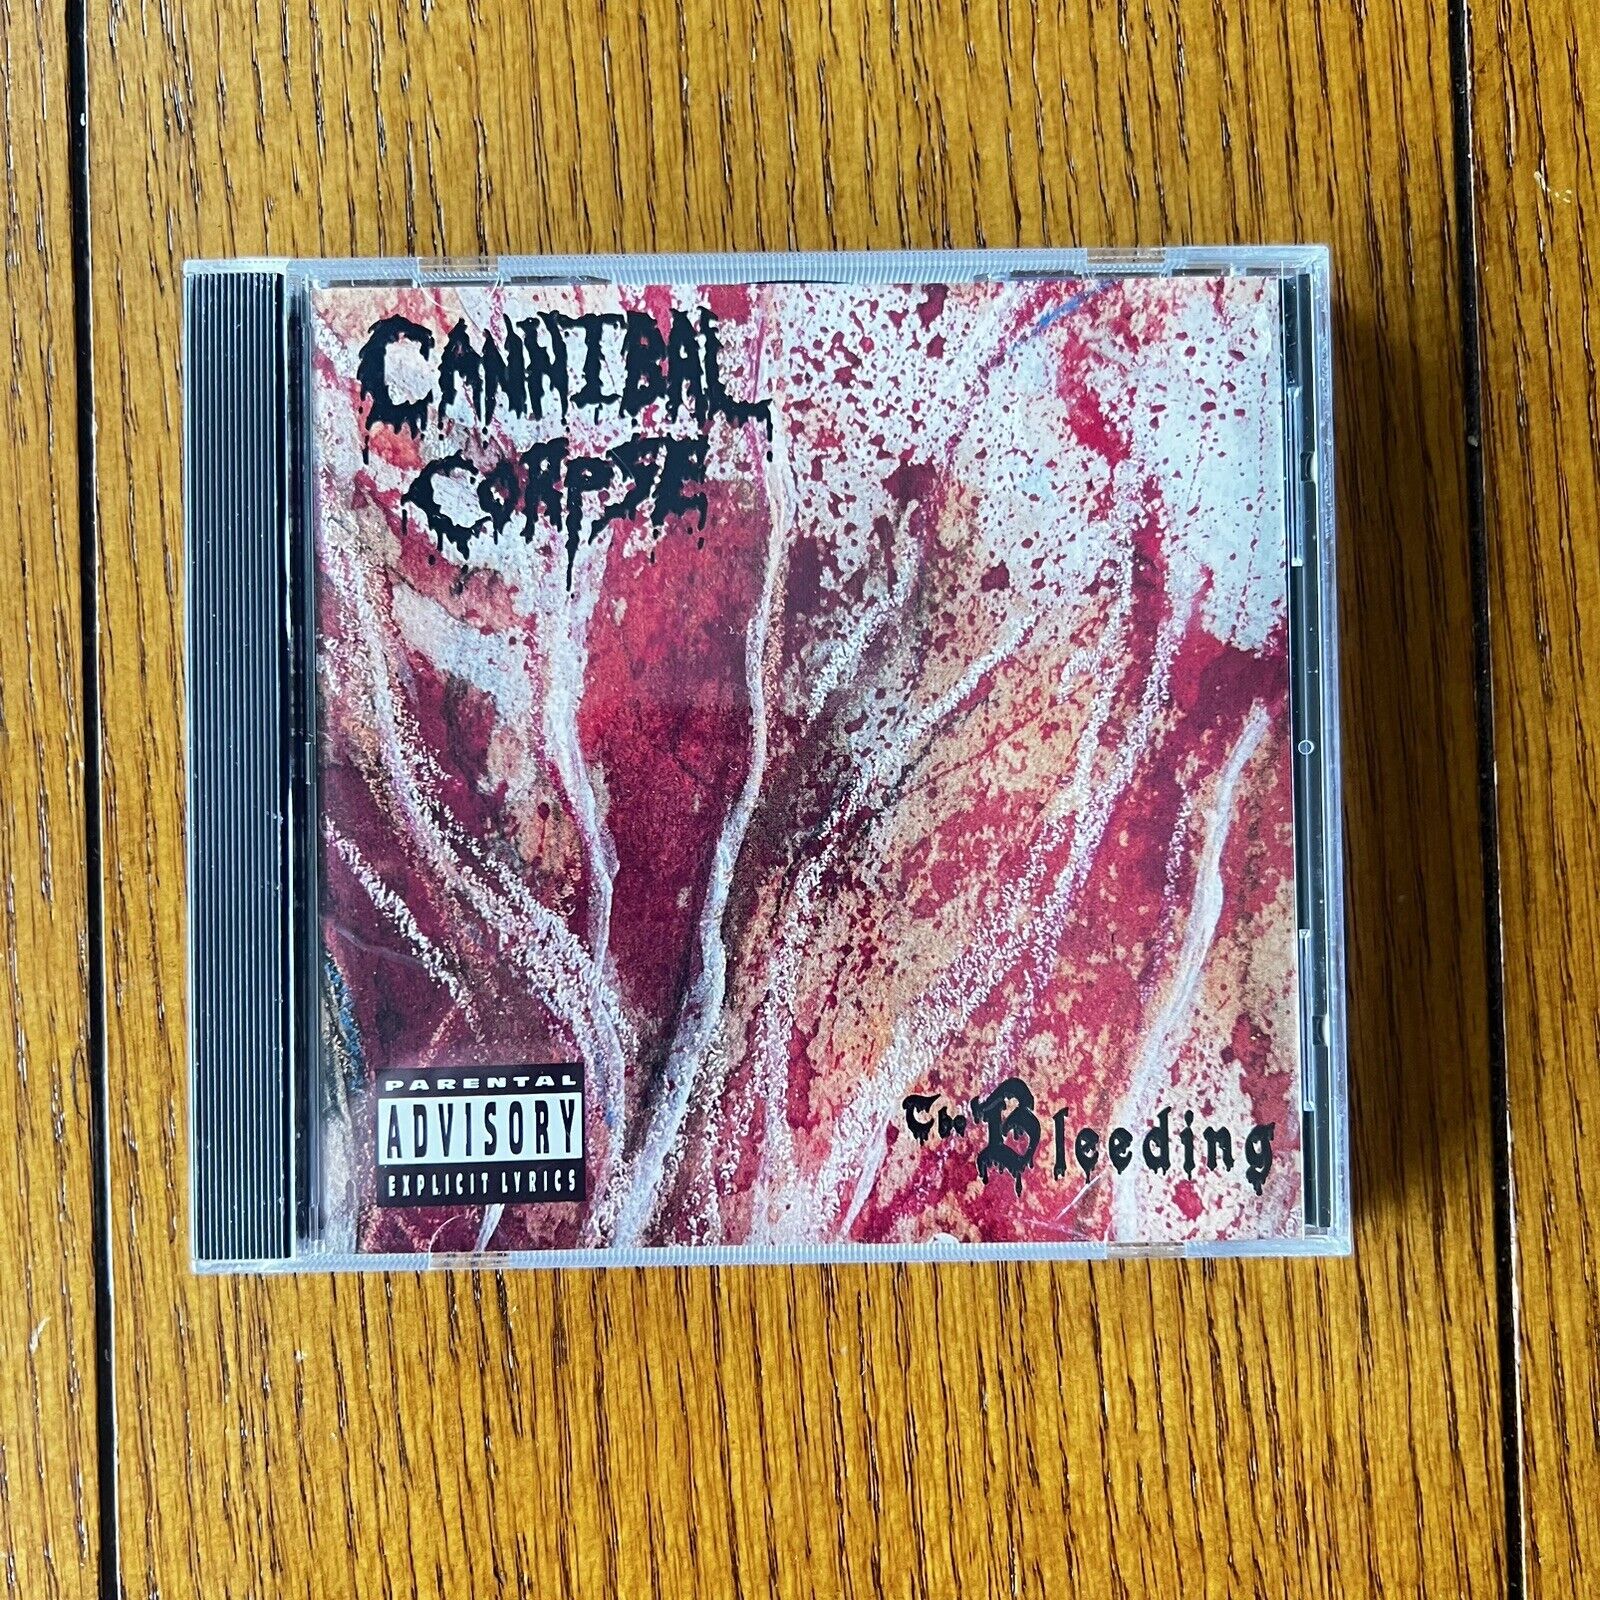 CANNIBAL CORPSE - The Bleeding CD 1994 Metal Blade Rec 3984-14037-2 ORIG RARE